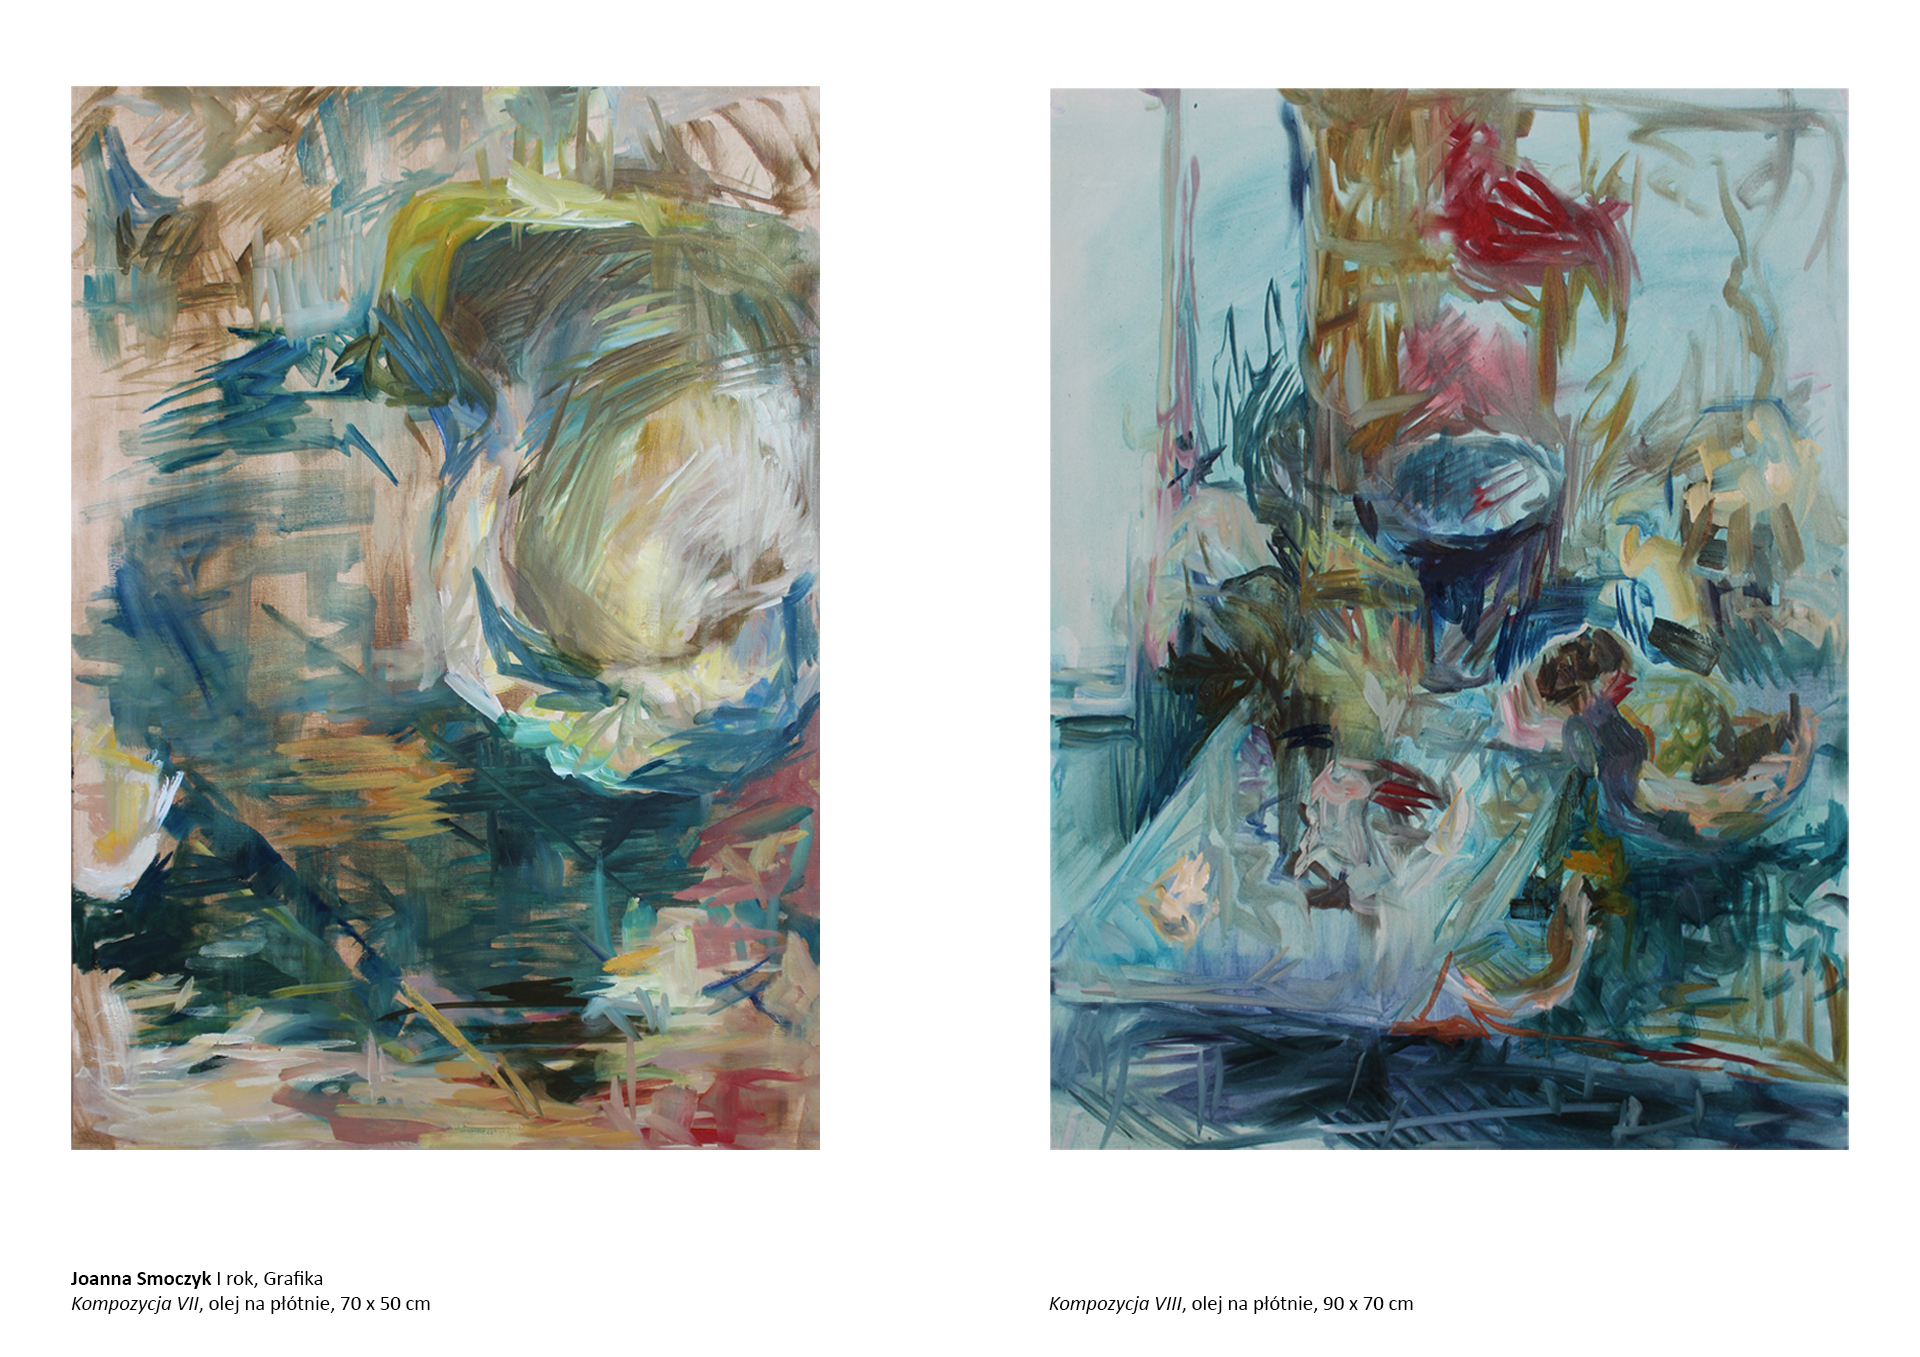 Joanna Smoczyk, I rok, Grafika, dwa obrazy olejne na płótnie.